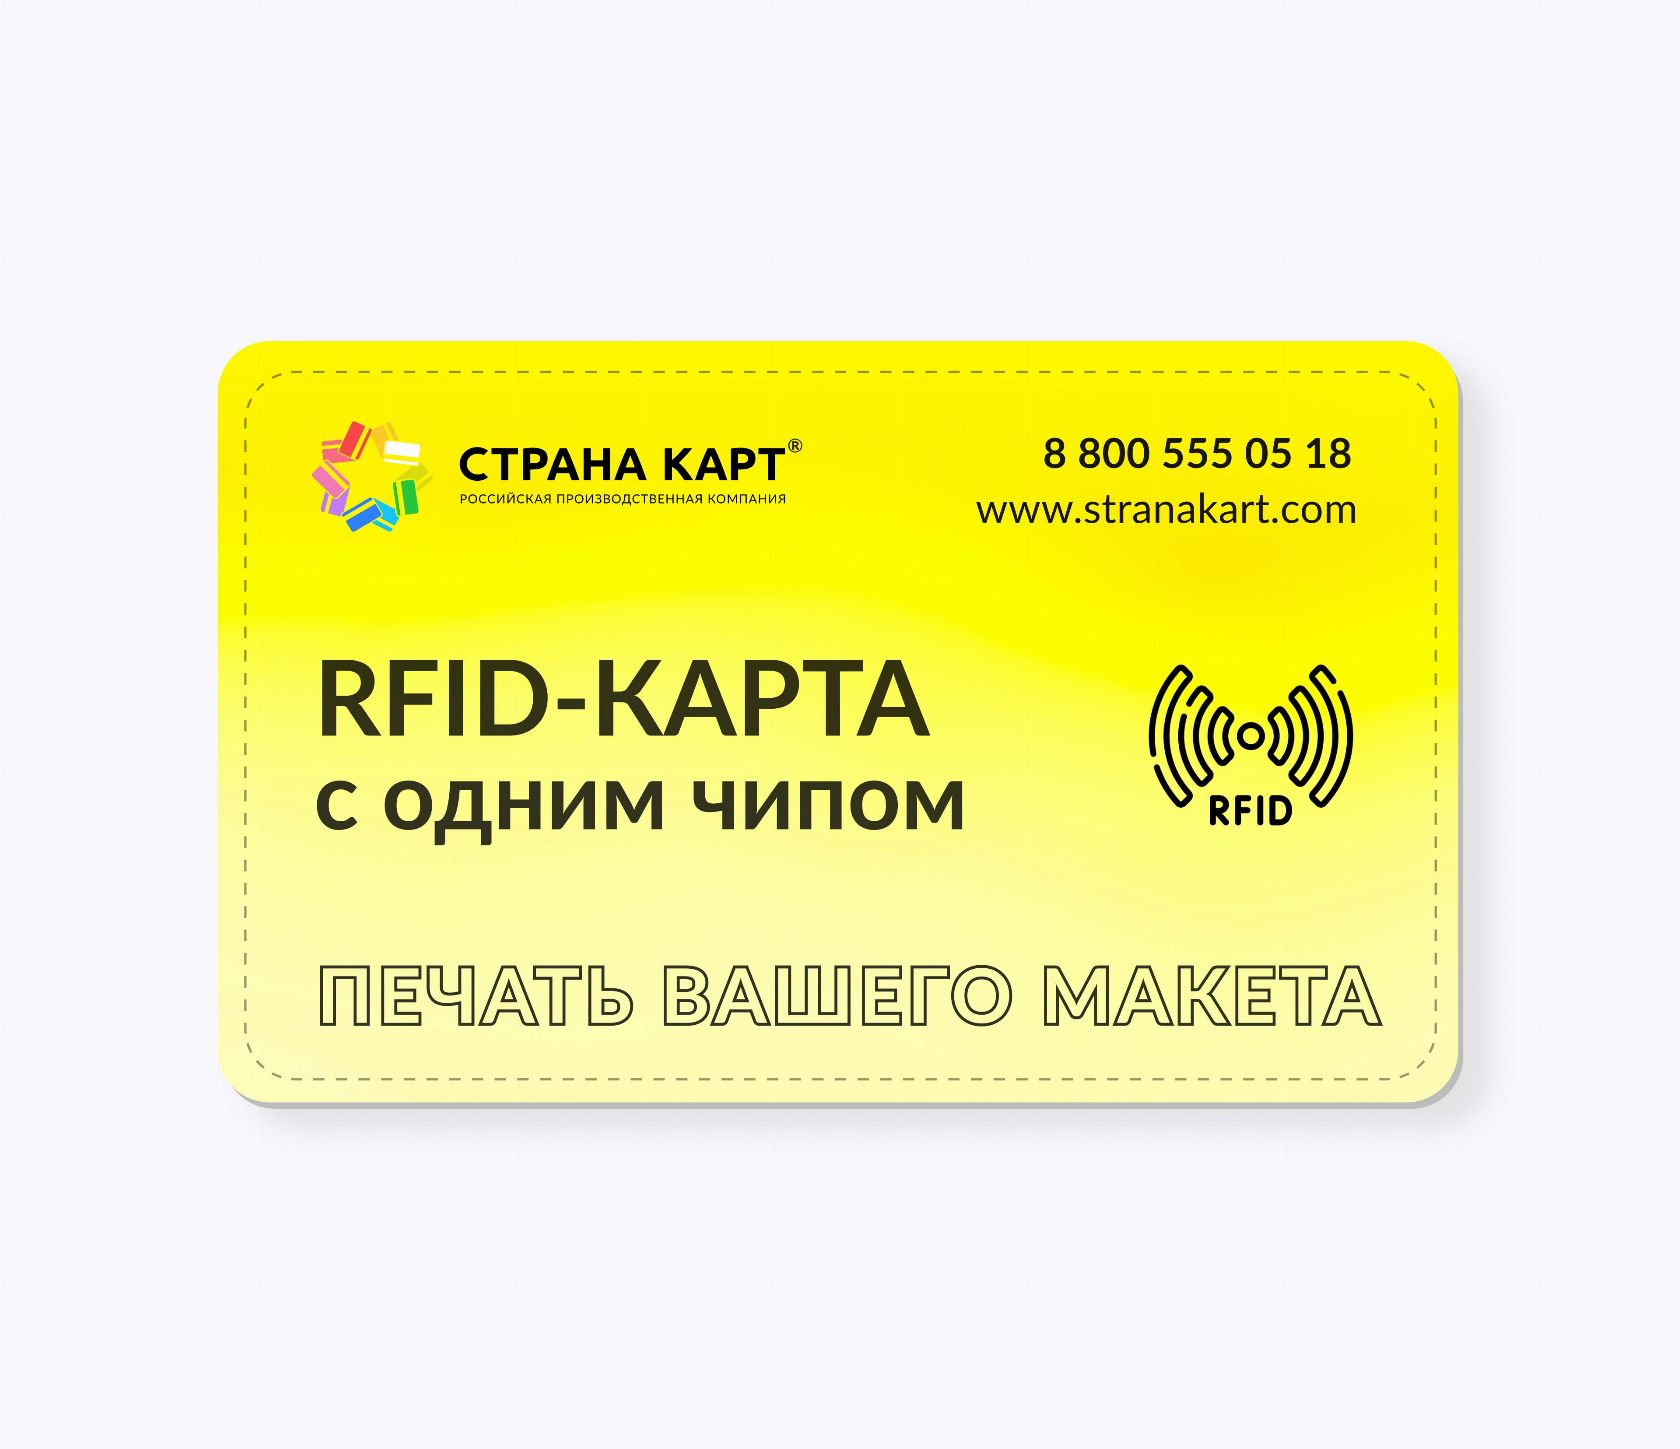 RFID-карты с чипом NXP MIFARE Ultralight EV1 7 byte UID печать вашего макета RFID-карты с чипом NXP MIFARE Ultralight EV1 7 byte UID